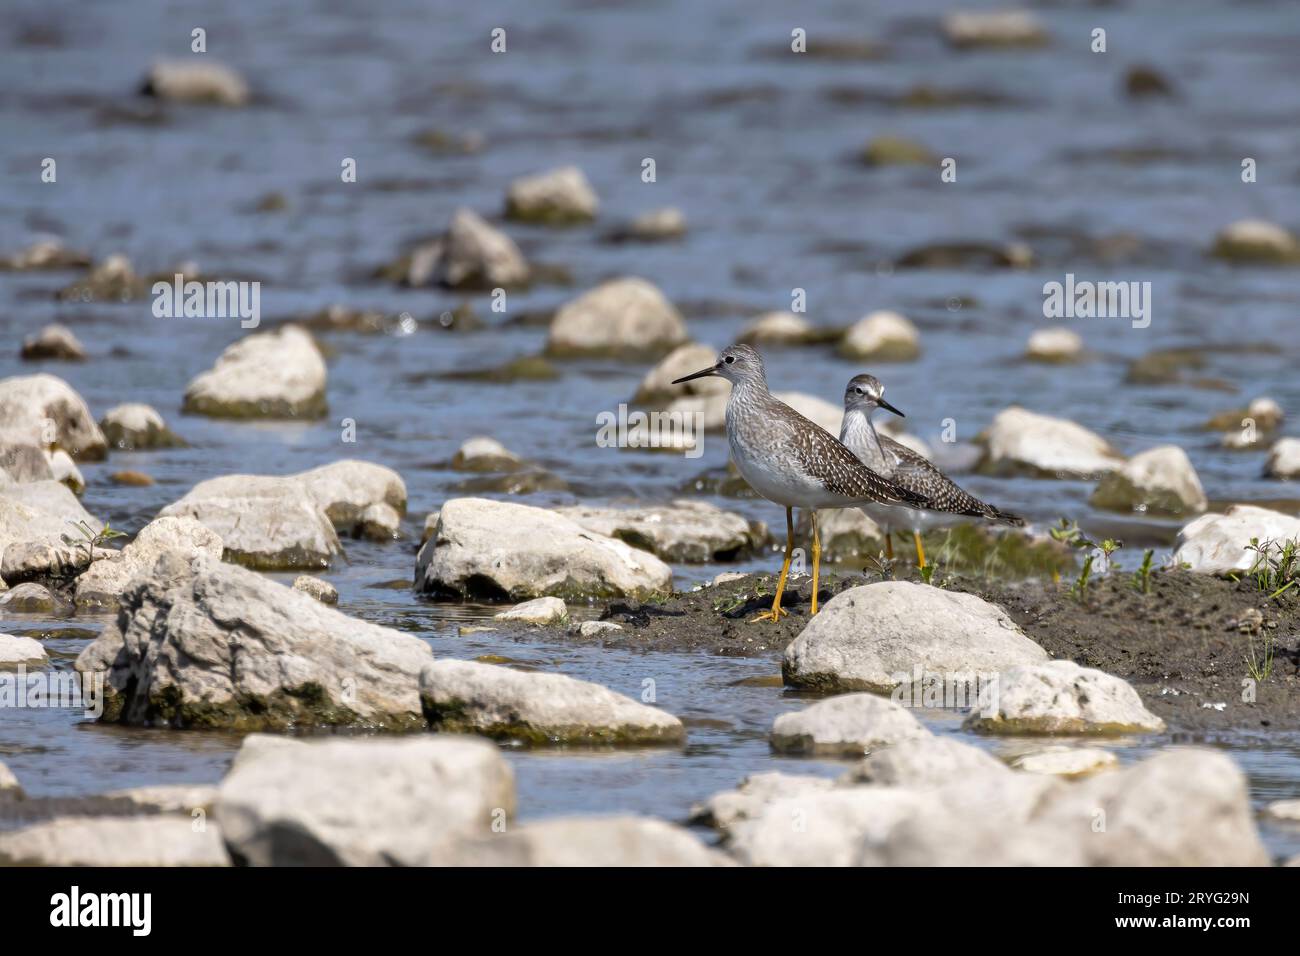 Waders or shorebirds Stock Photo